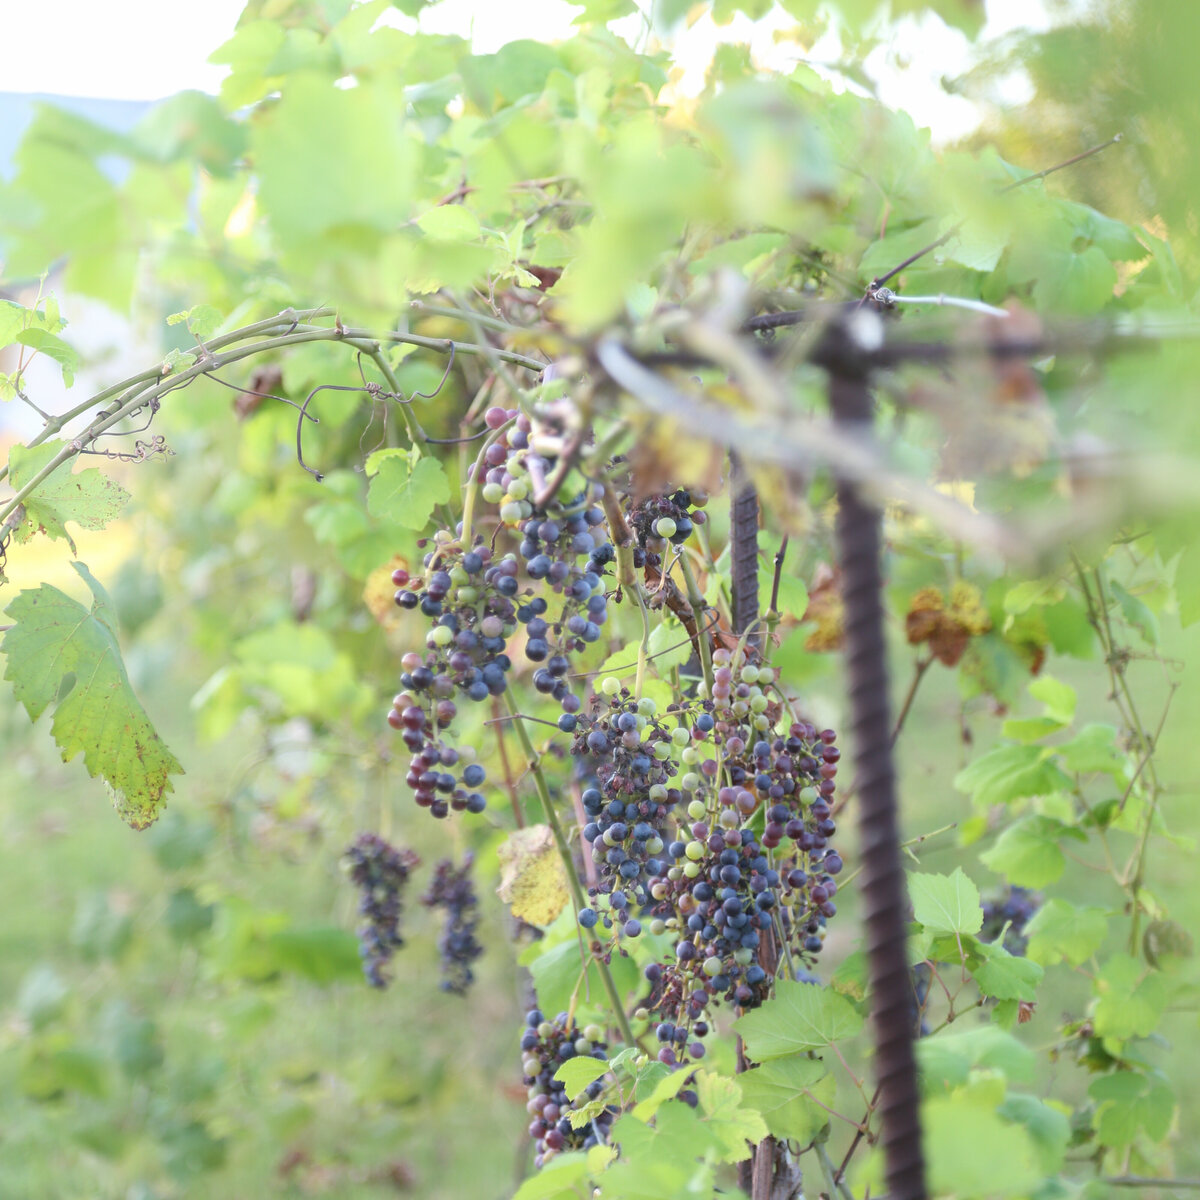 grape vine detail at vineyard wedding by Texas photographer